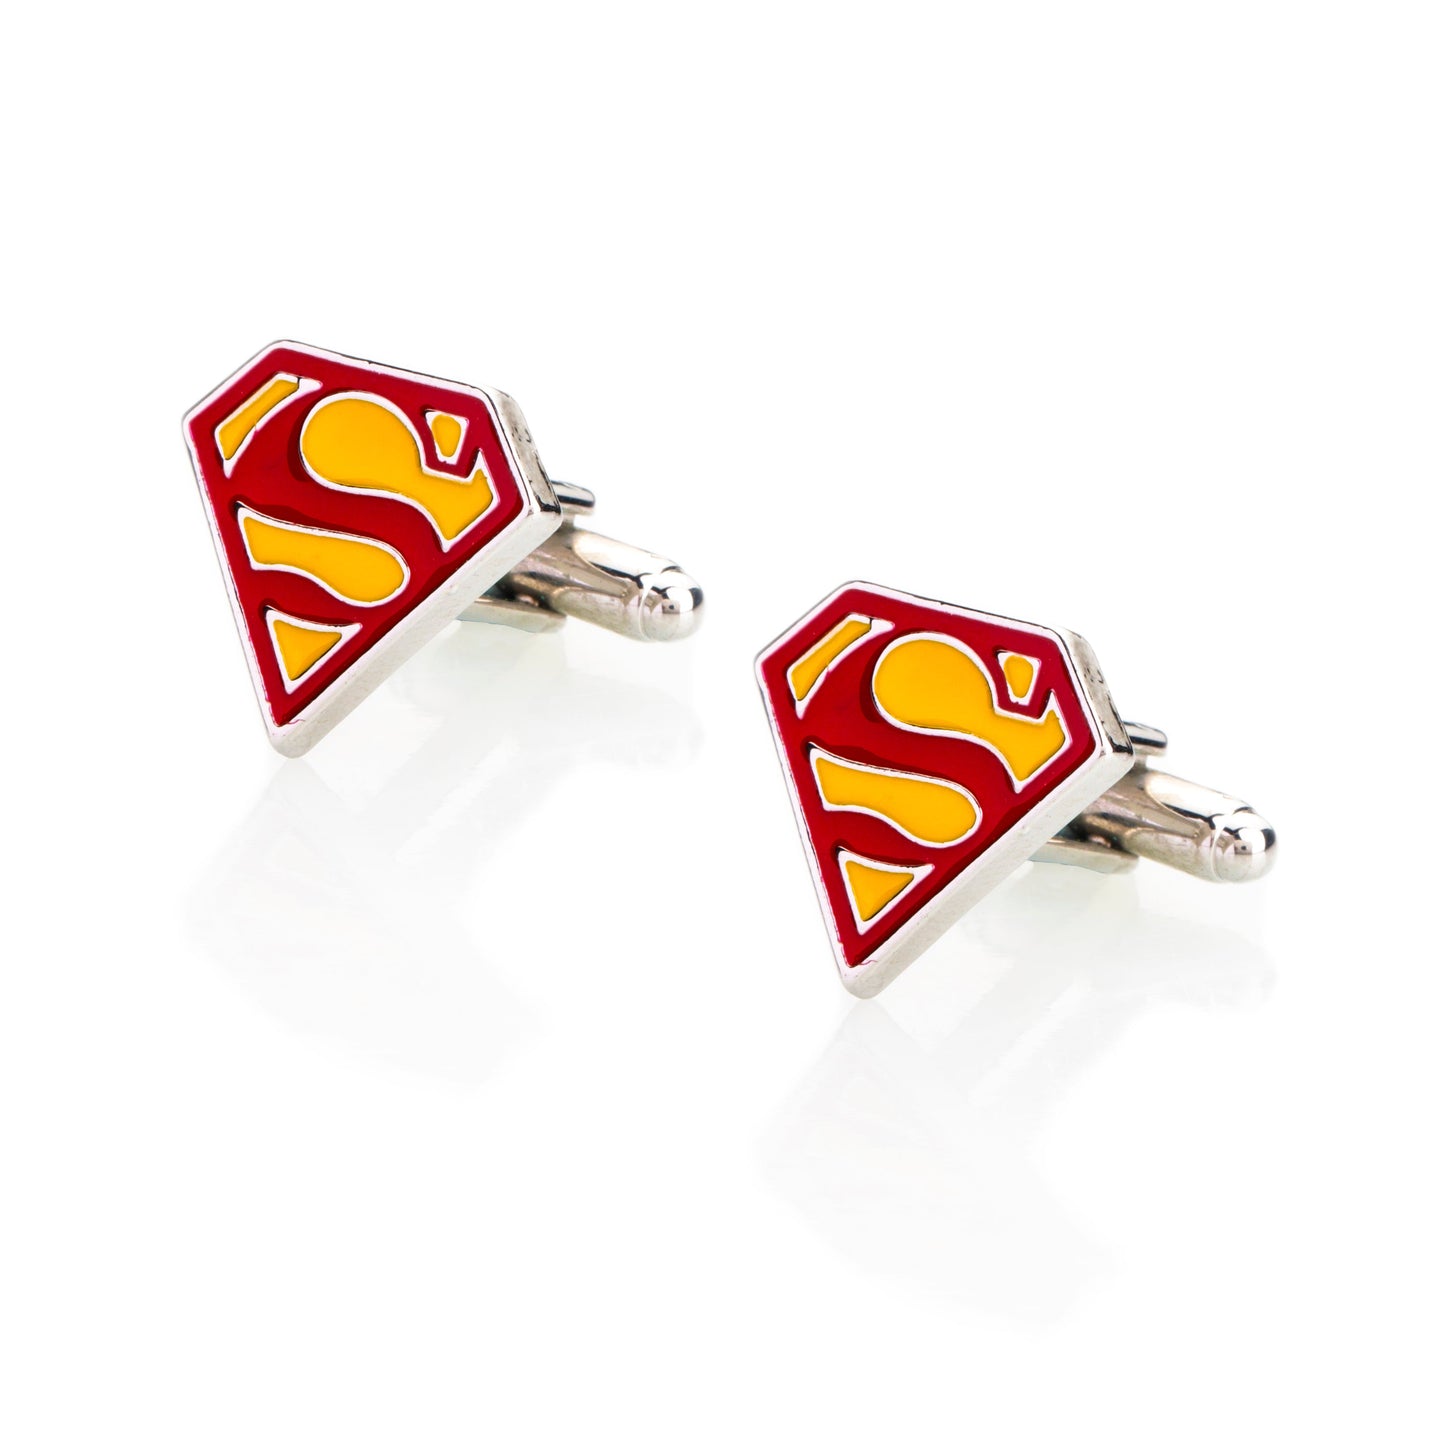 Elegant Fancy and Designer Silver Plated Superman Cufflinks for Men - Superhero Superman Design (SJ_7107) - Shining Jewel